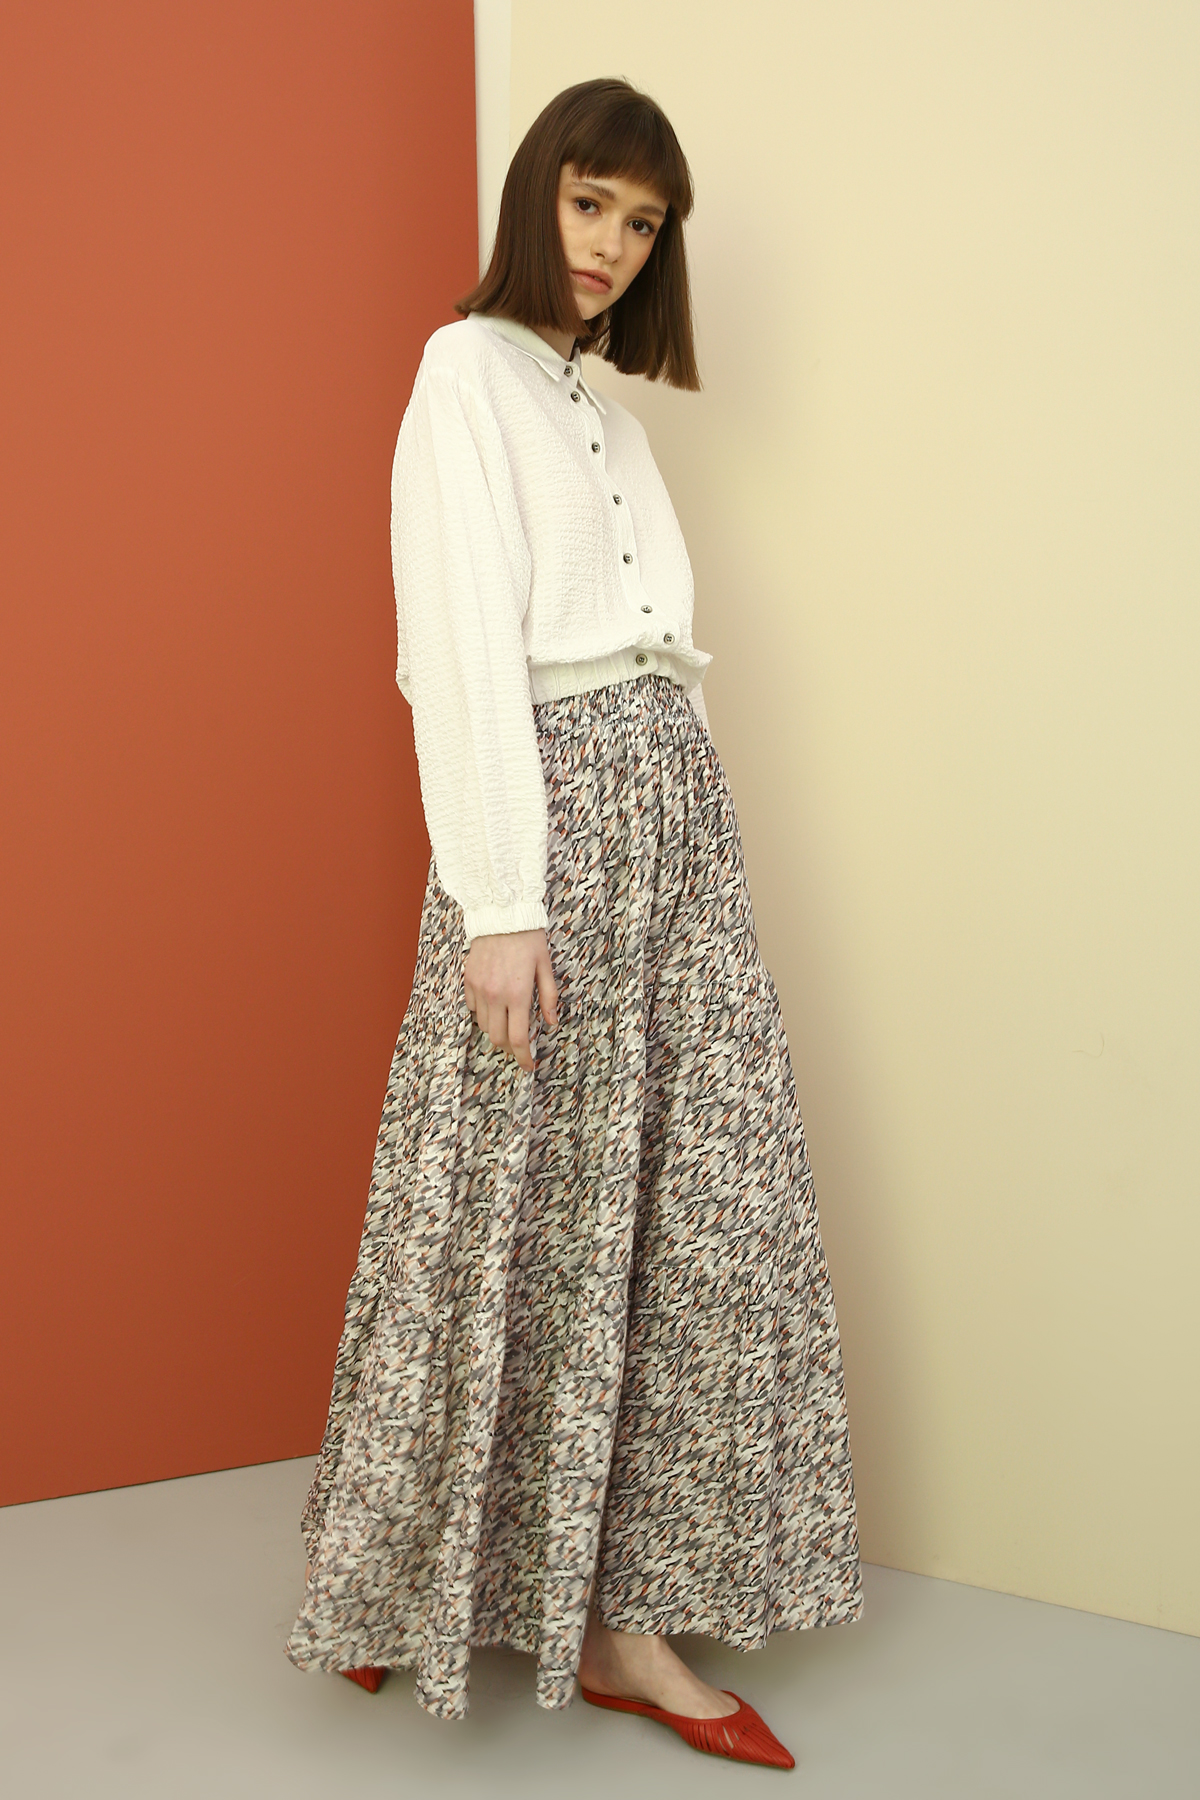 100% Cotton Elastic Waist Fİgured Skirt